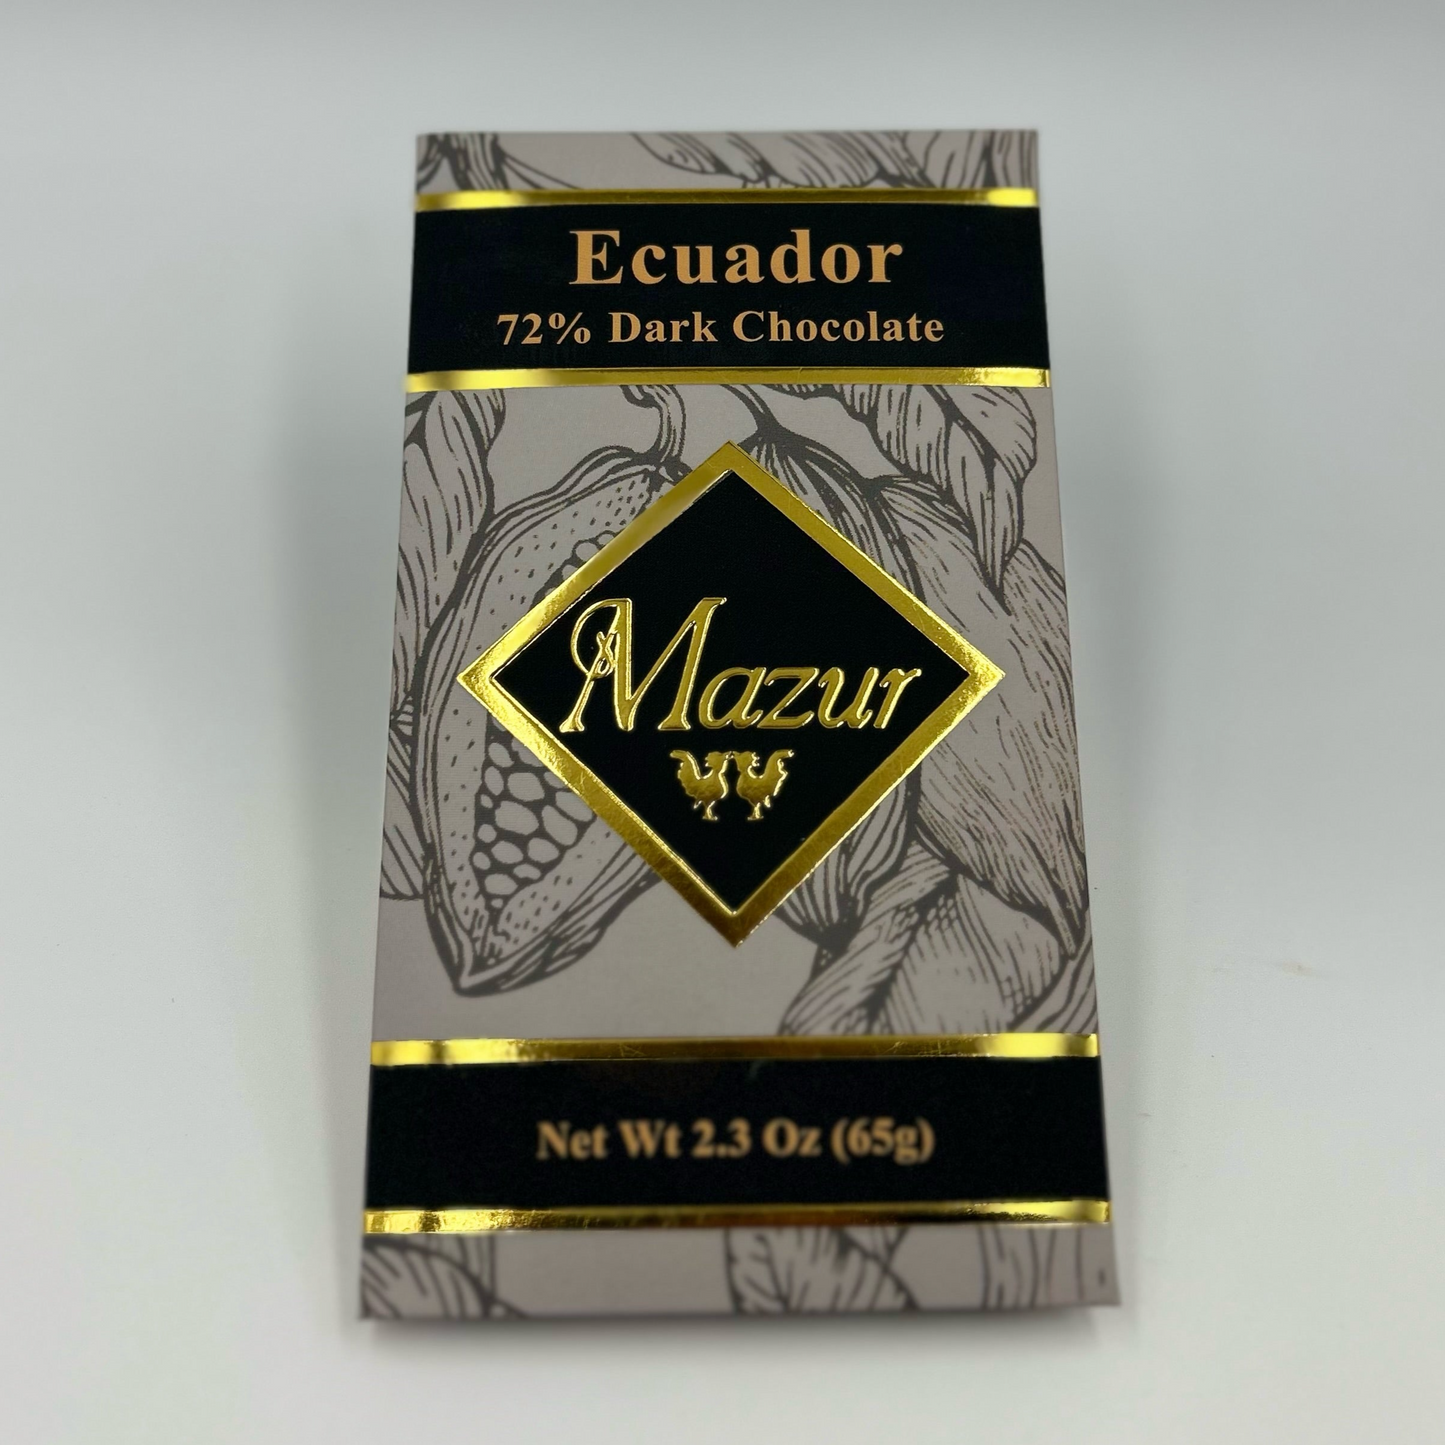 Ecuador 72% Dark